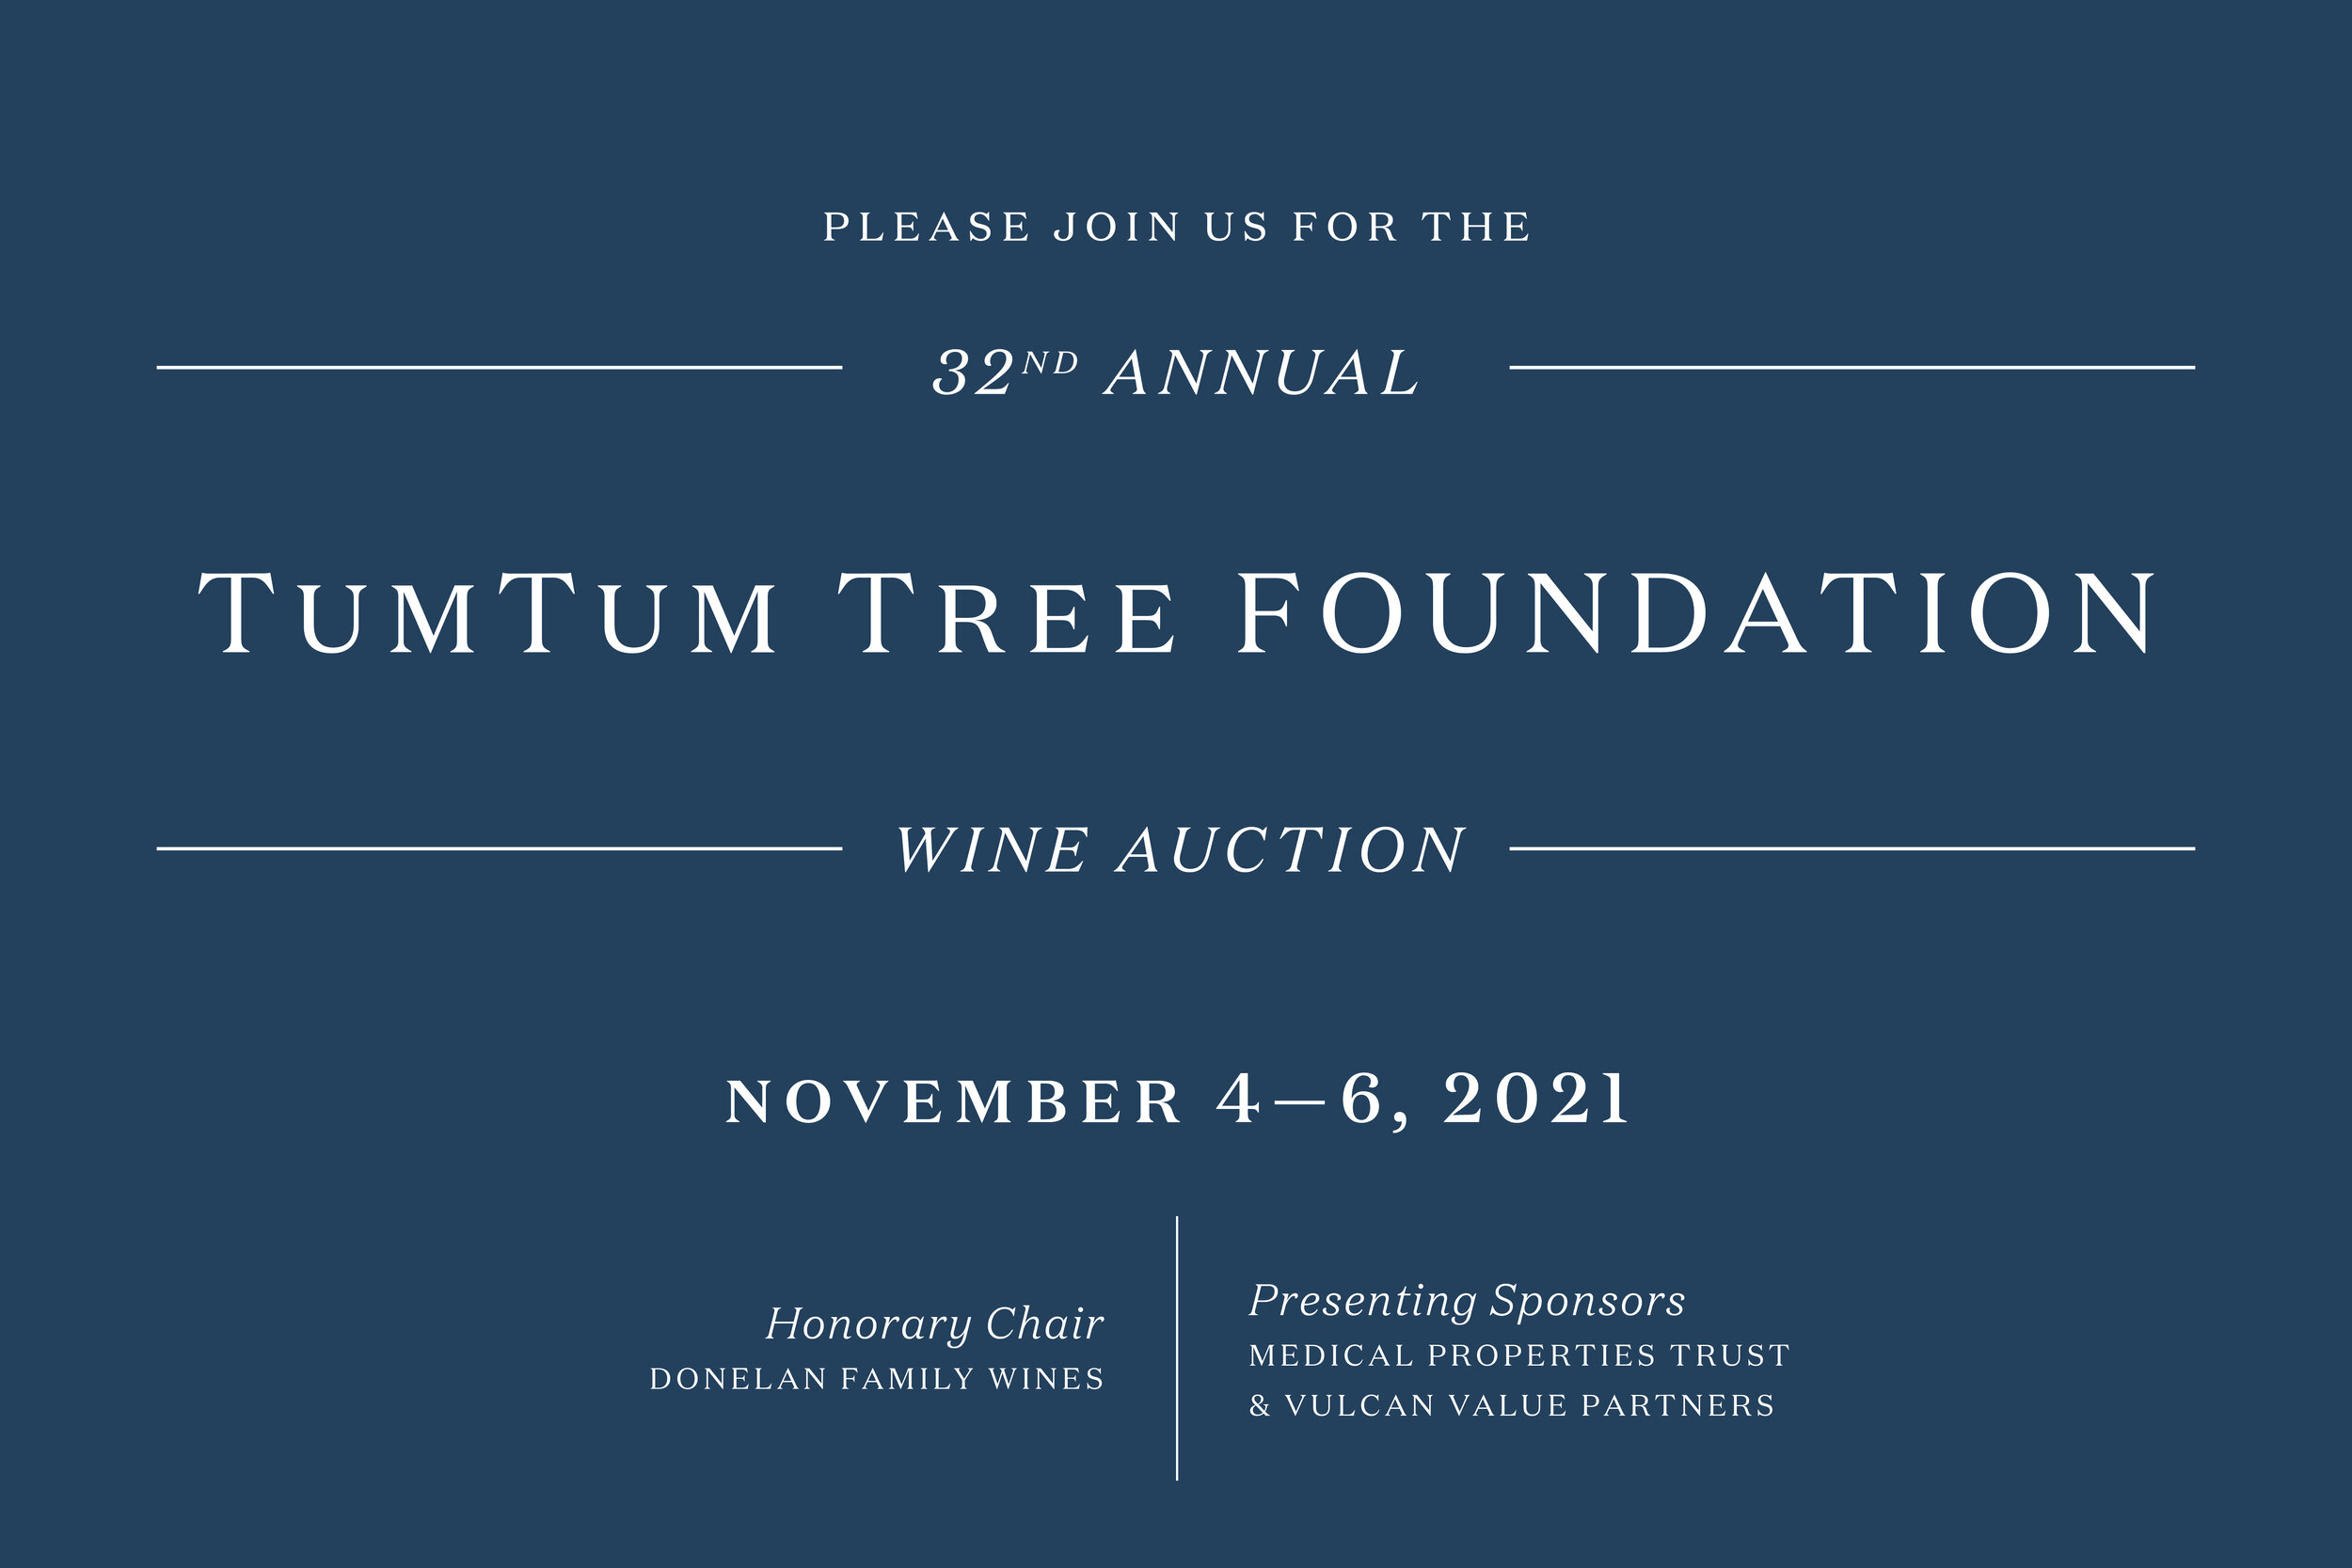 Tum Tum Tree Foundation